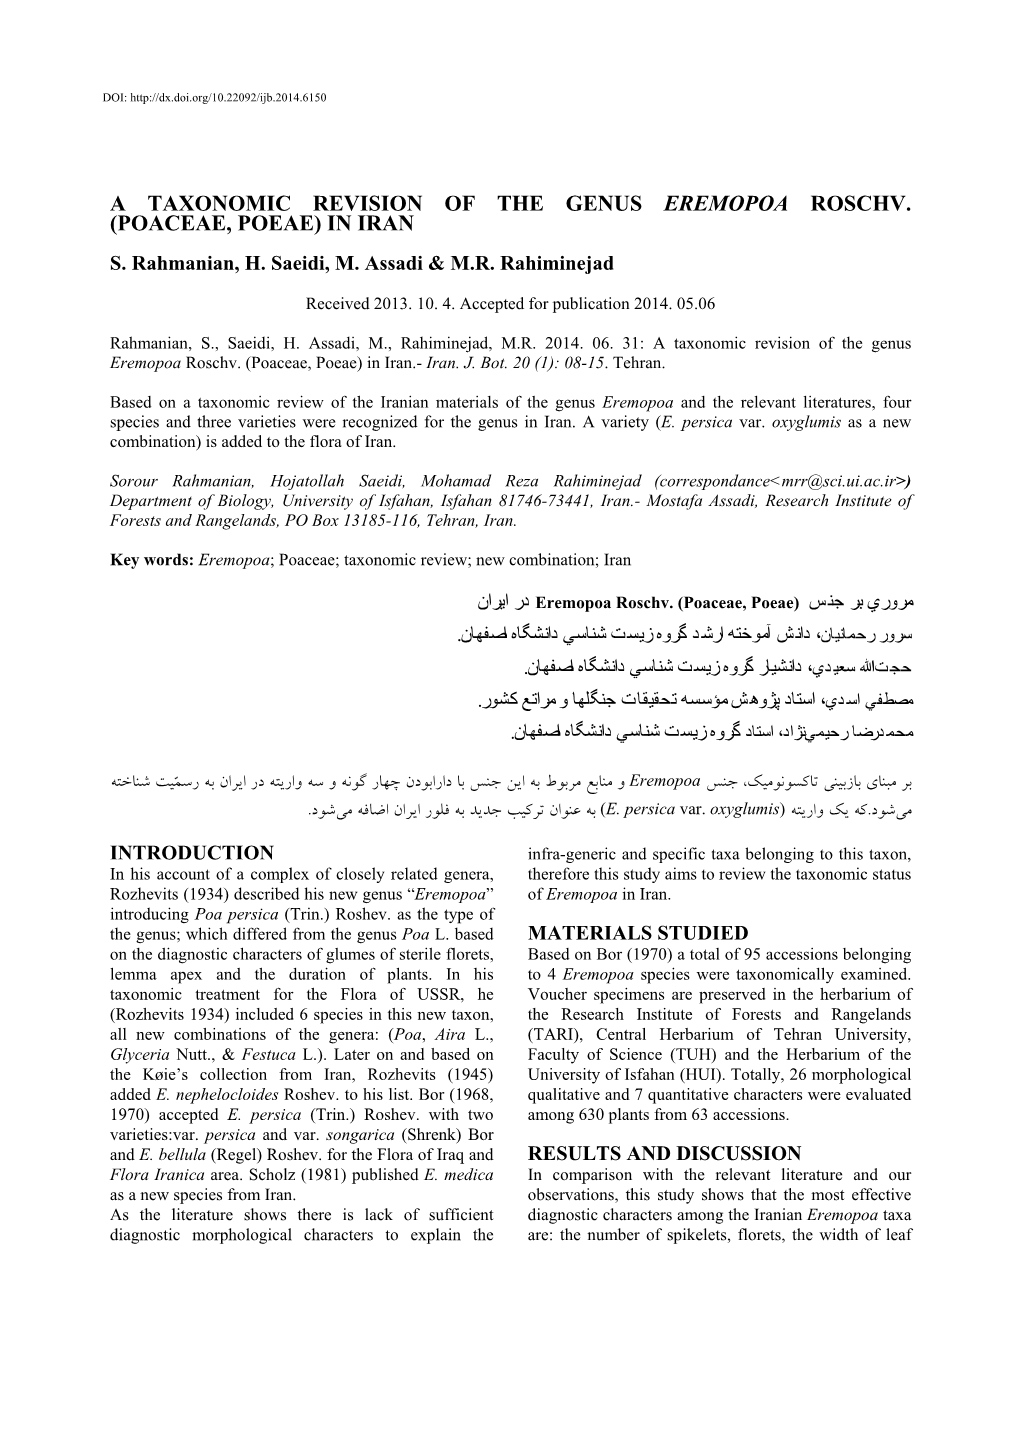 A Taxonomic Revision of the Genus Eremopoa Roschv. (Poaceae, Poeae) in Iran